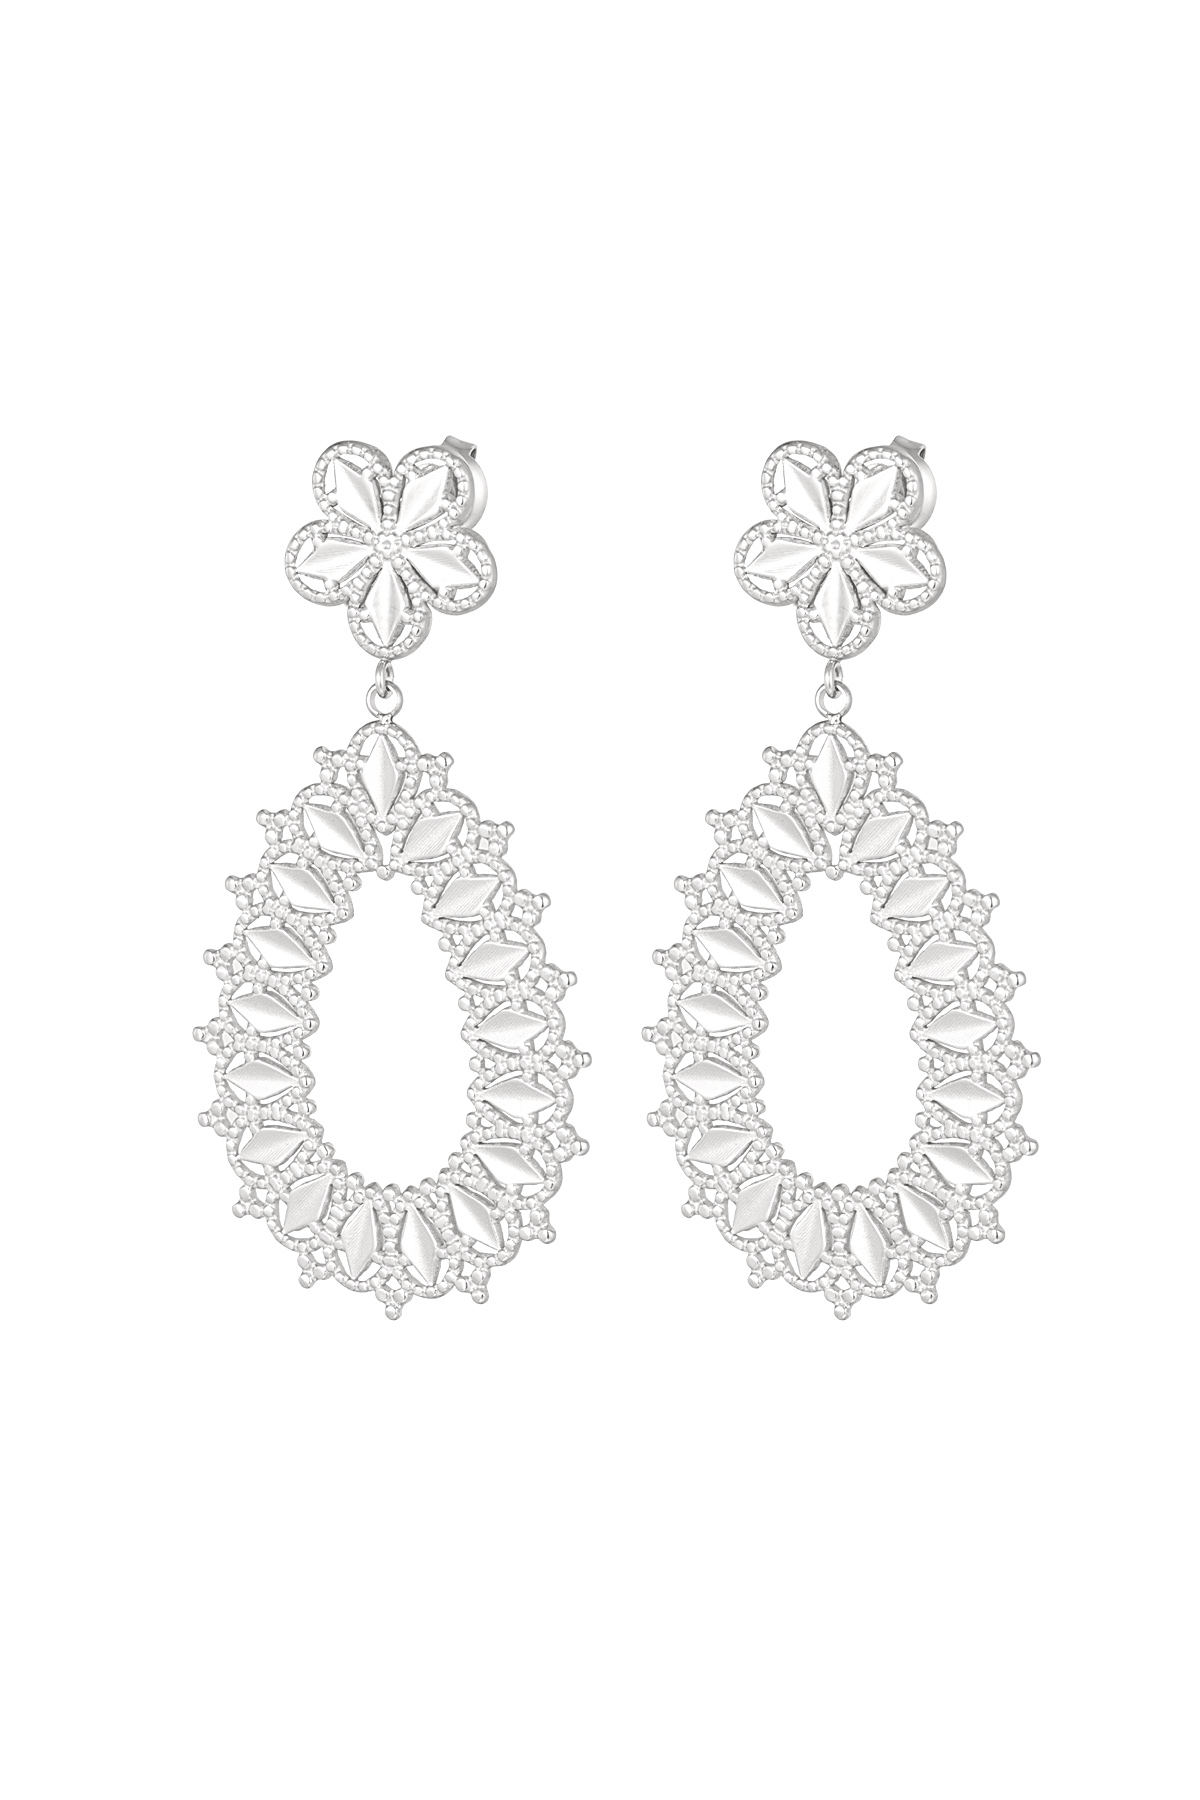 Flower earrings with oval pendant - silver